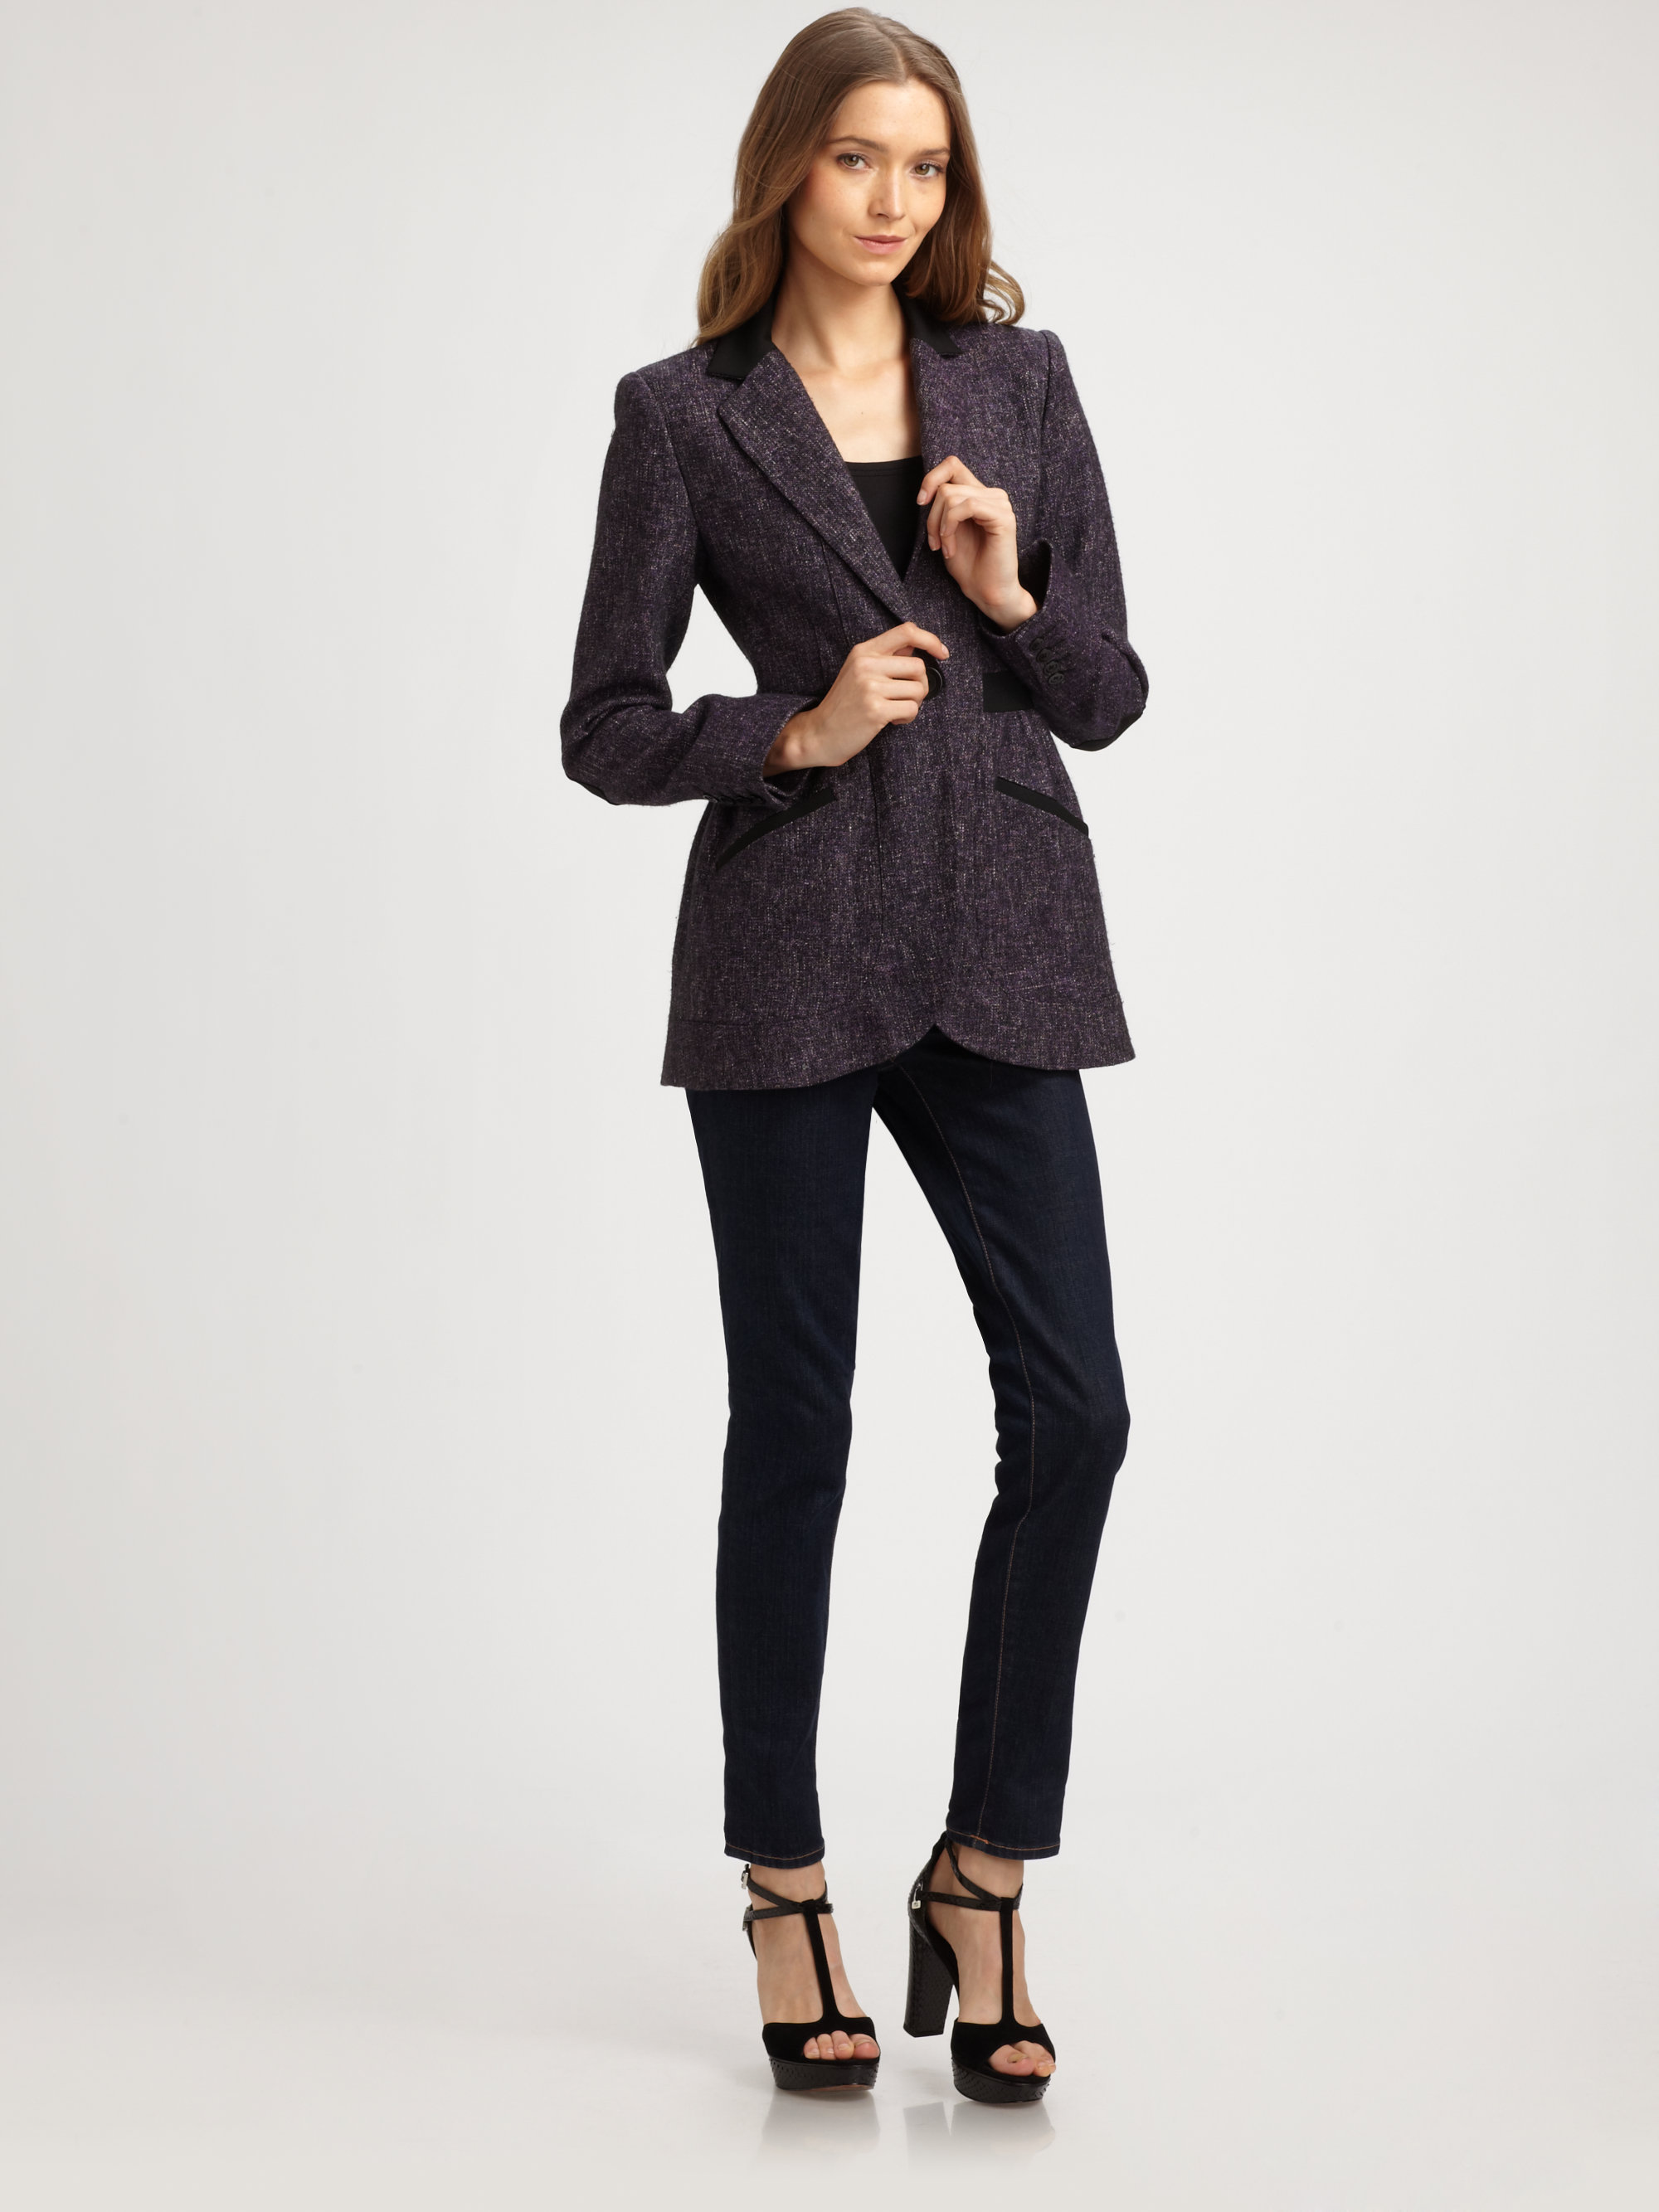 Lyst - Nanette Lepore Enchanted Tweed Jacket in Purple